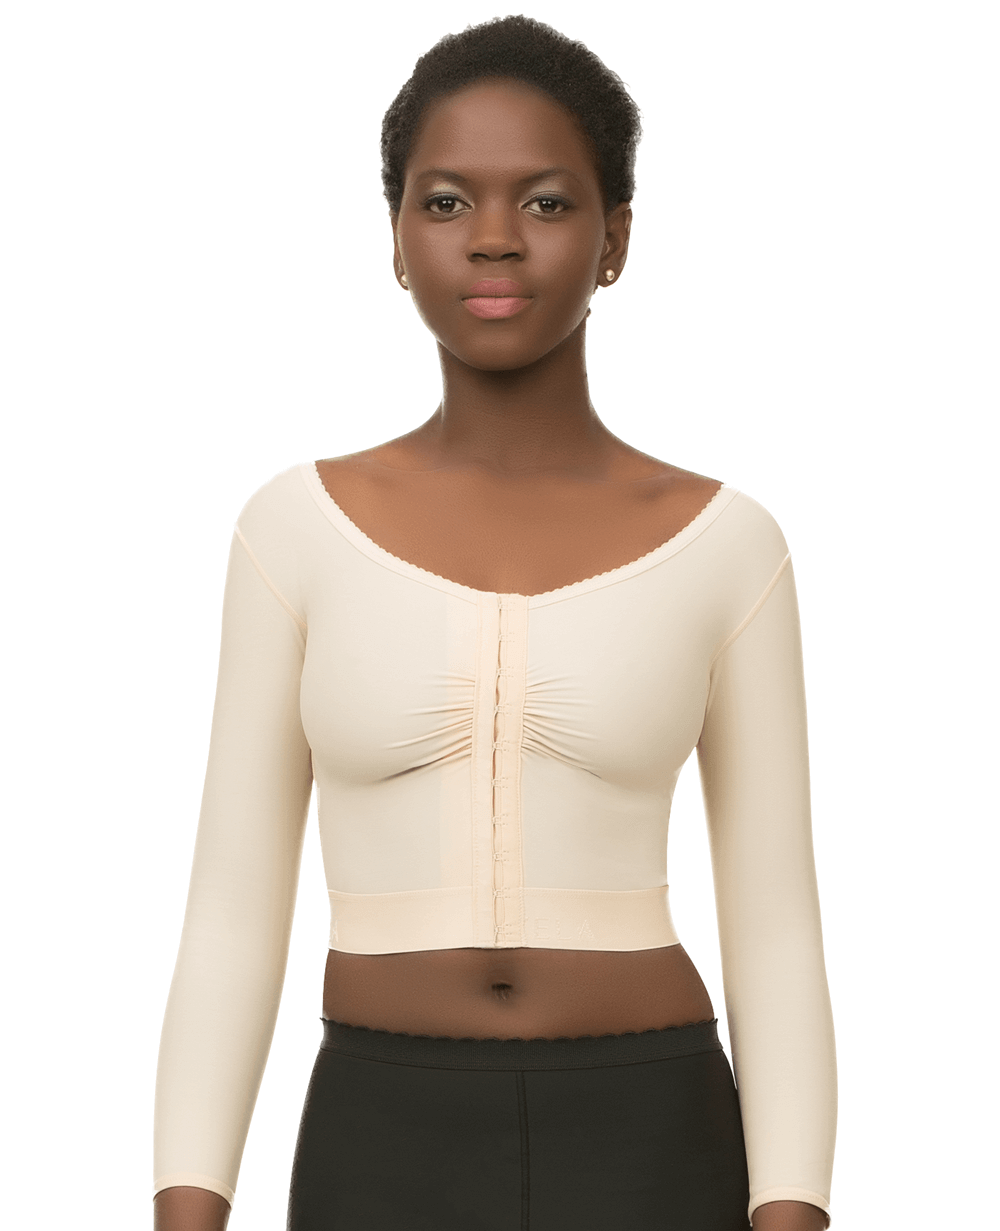 Long sleeved women compression vest to alleviate Lipoedema